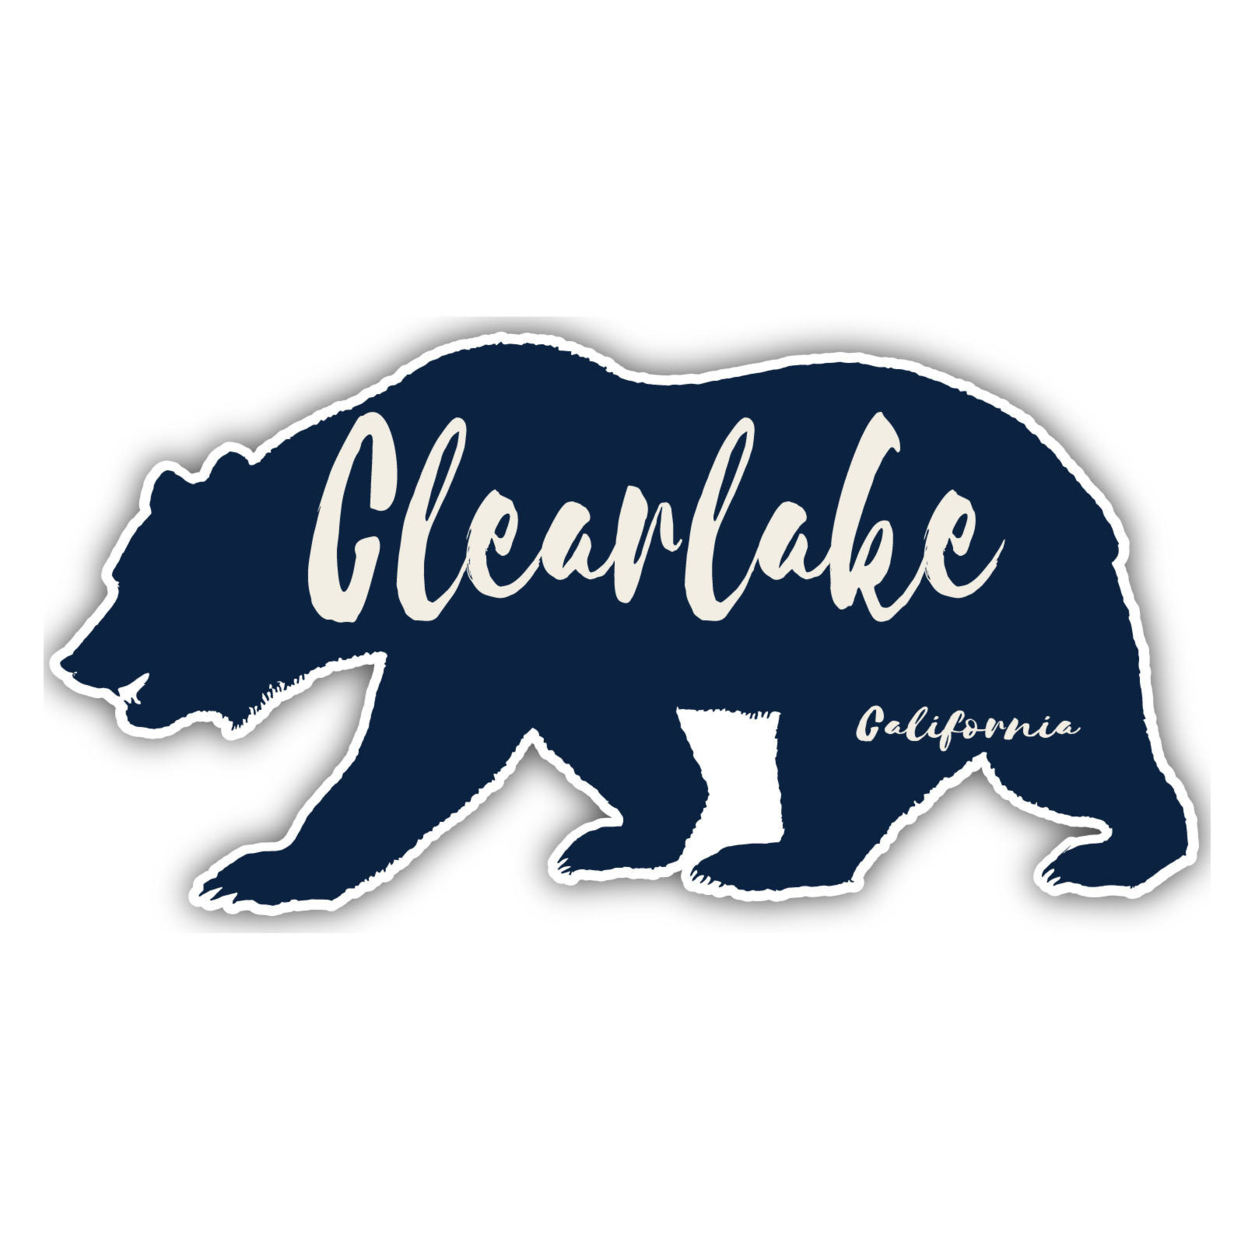 Clearlake California Souvenir Decorative Stickers (Choose Theme And Size) - Single Unit, 4-Inch, Bear